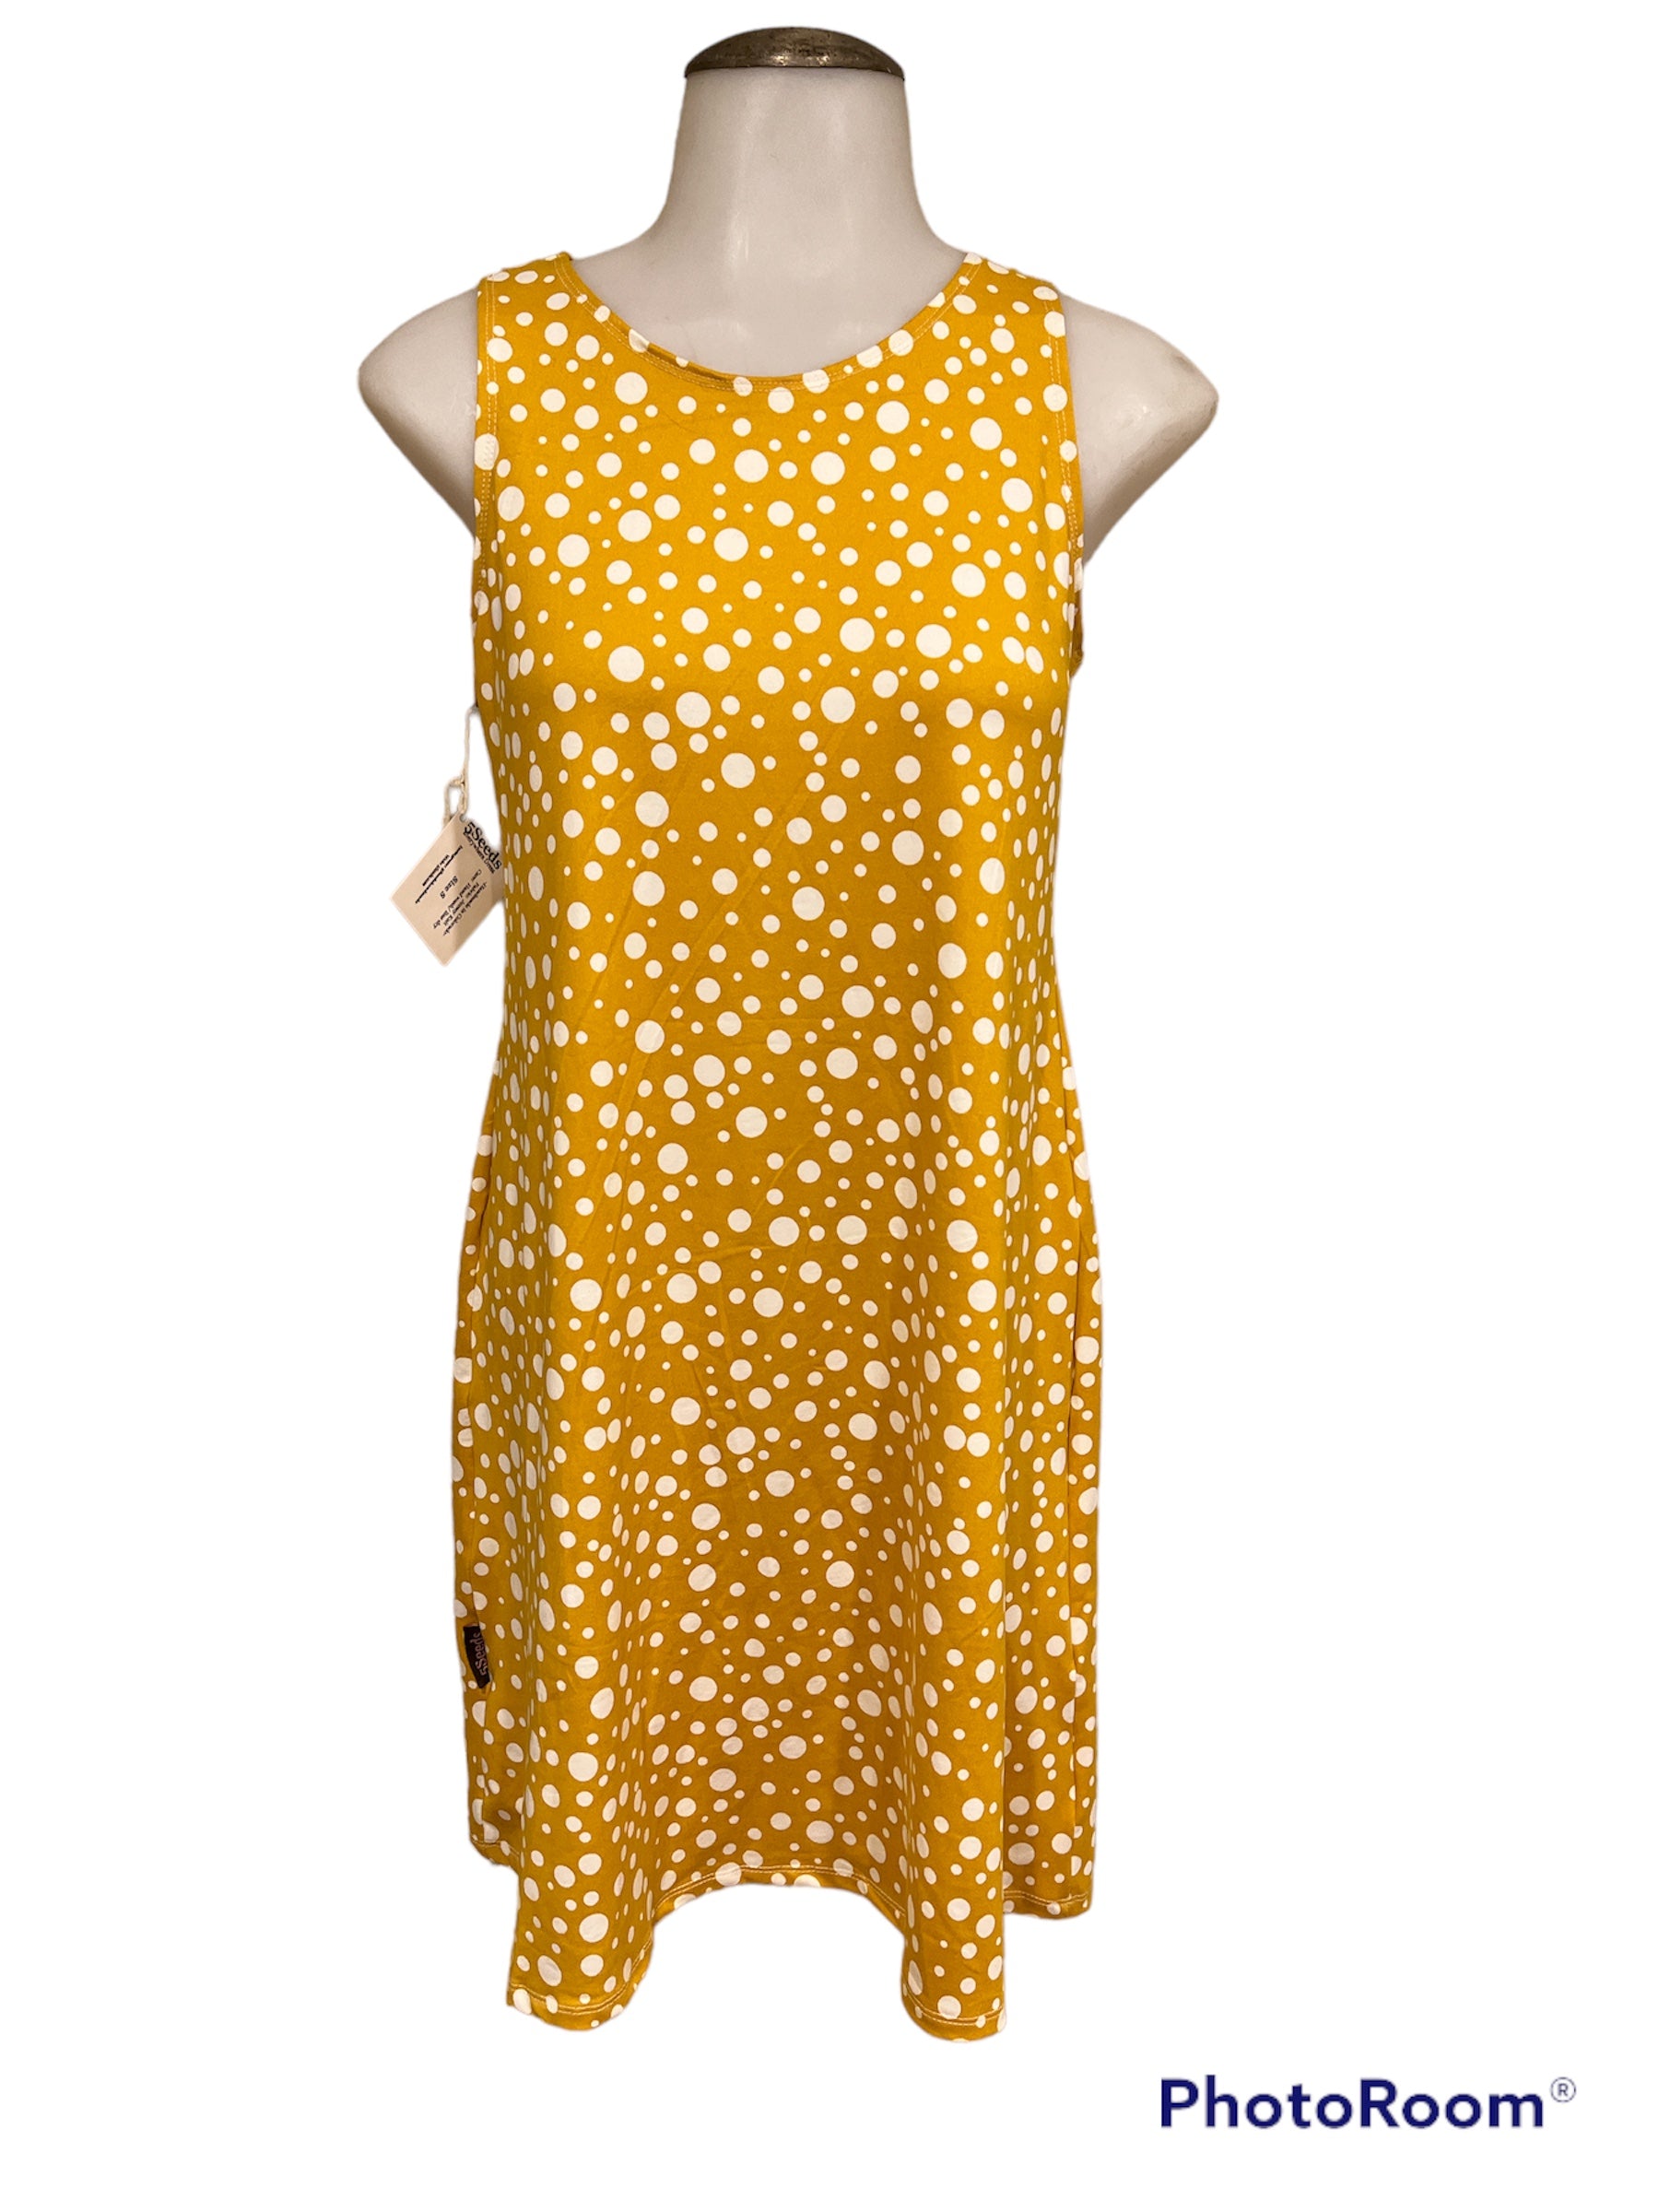 Mustard Yellow Polka Dot Dress